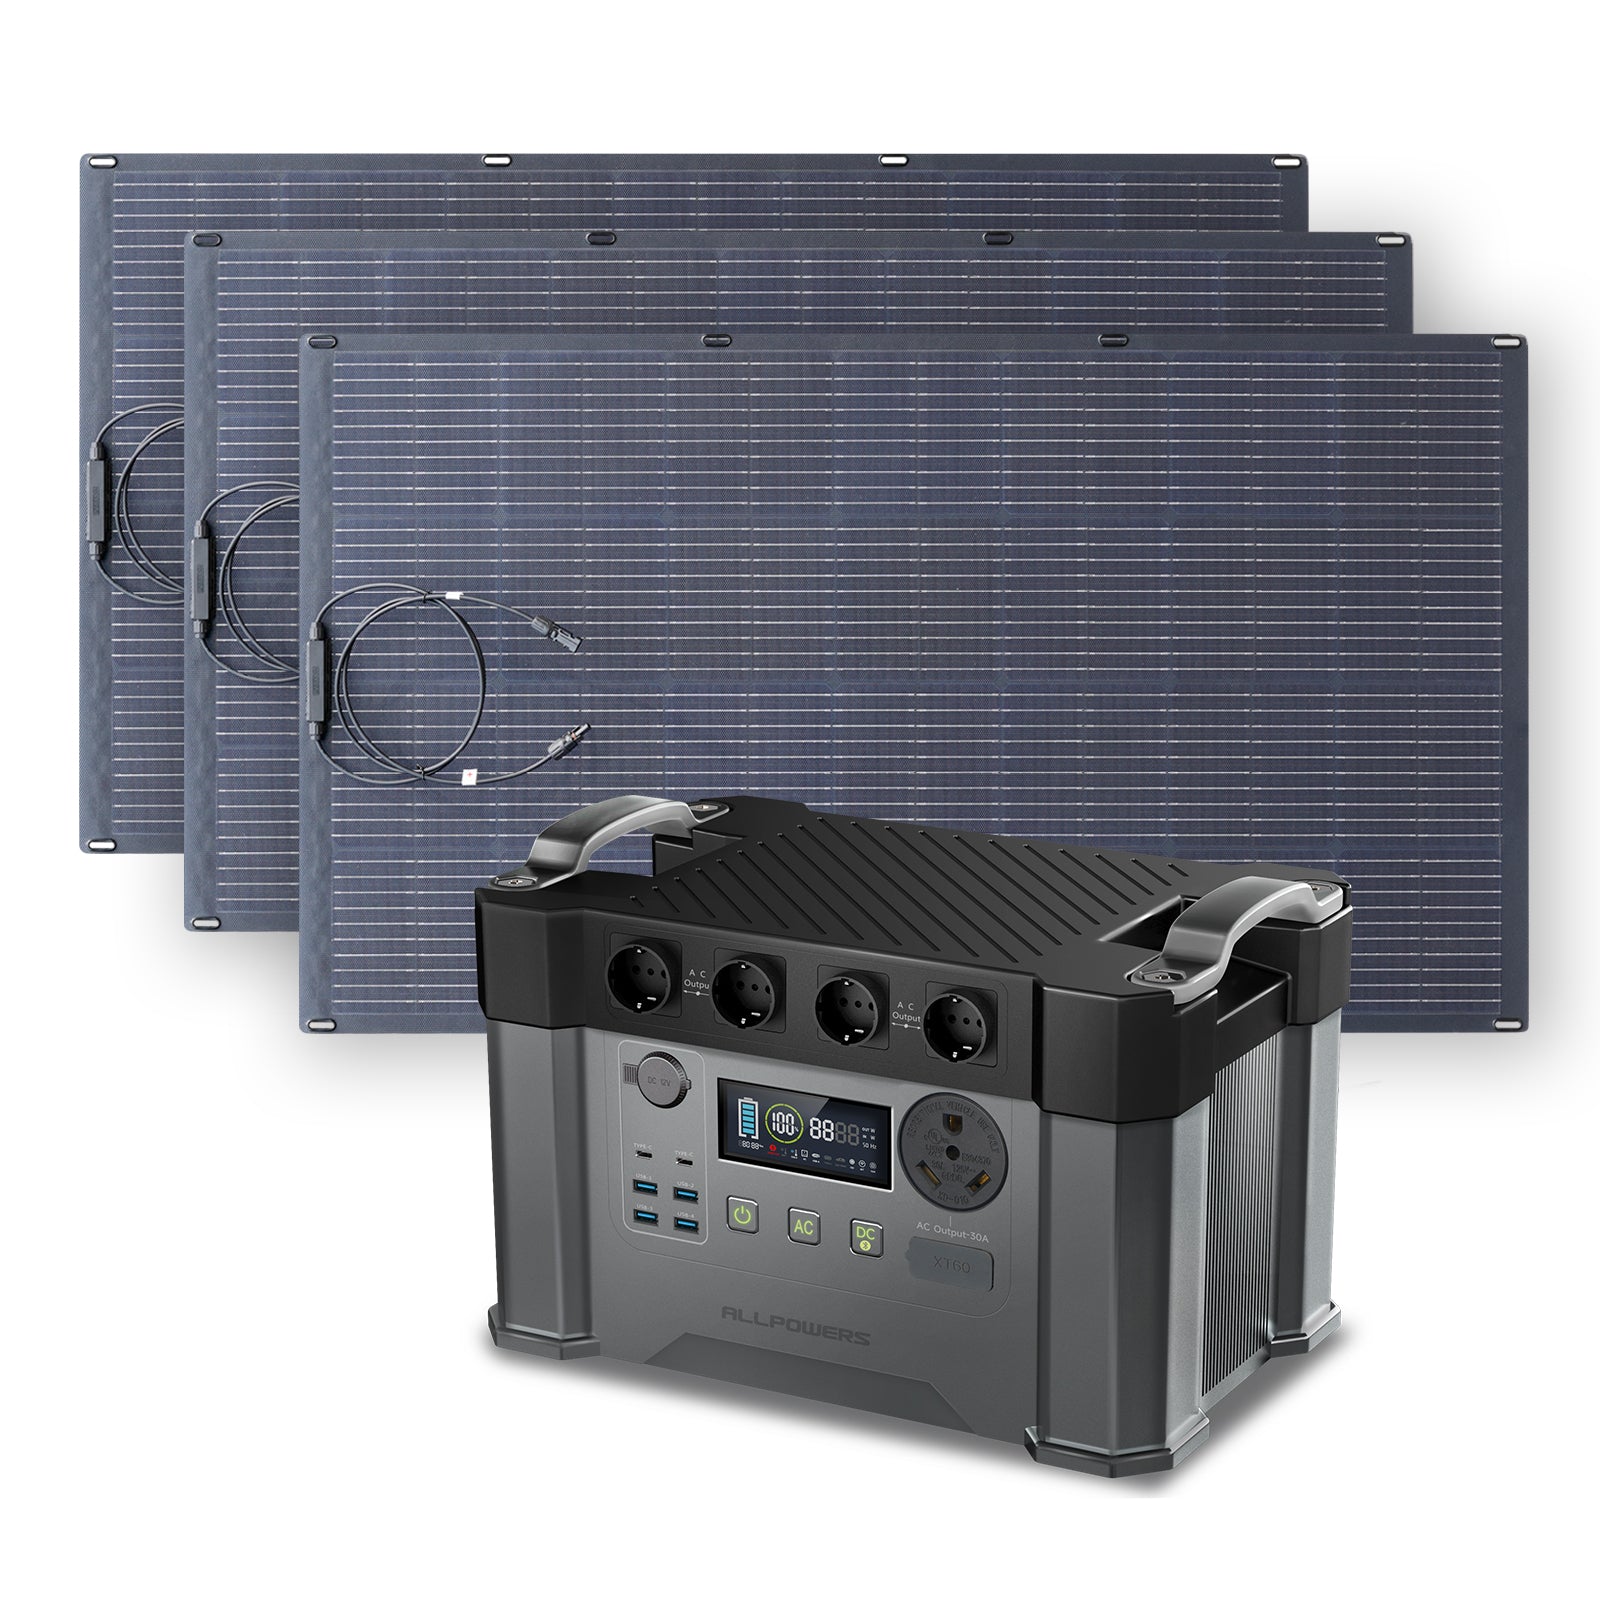 s2000-pro-3-sf200-solar-generator-kit.jpg